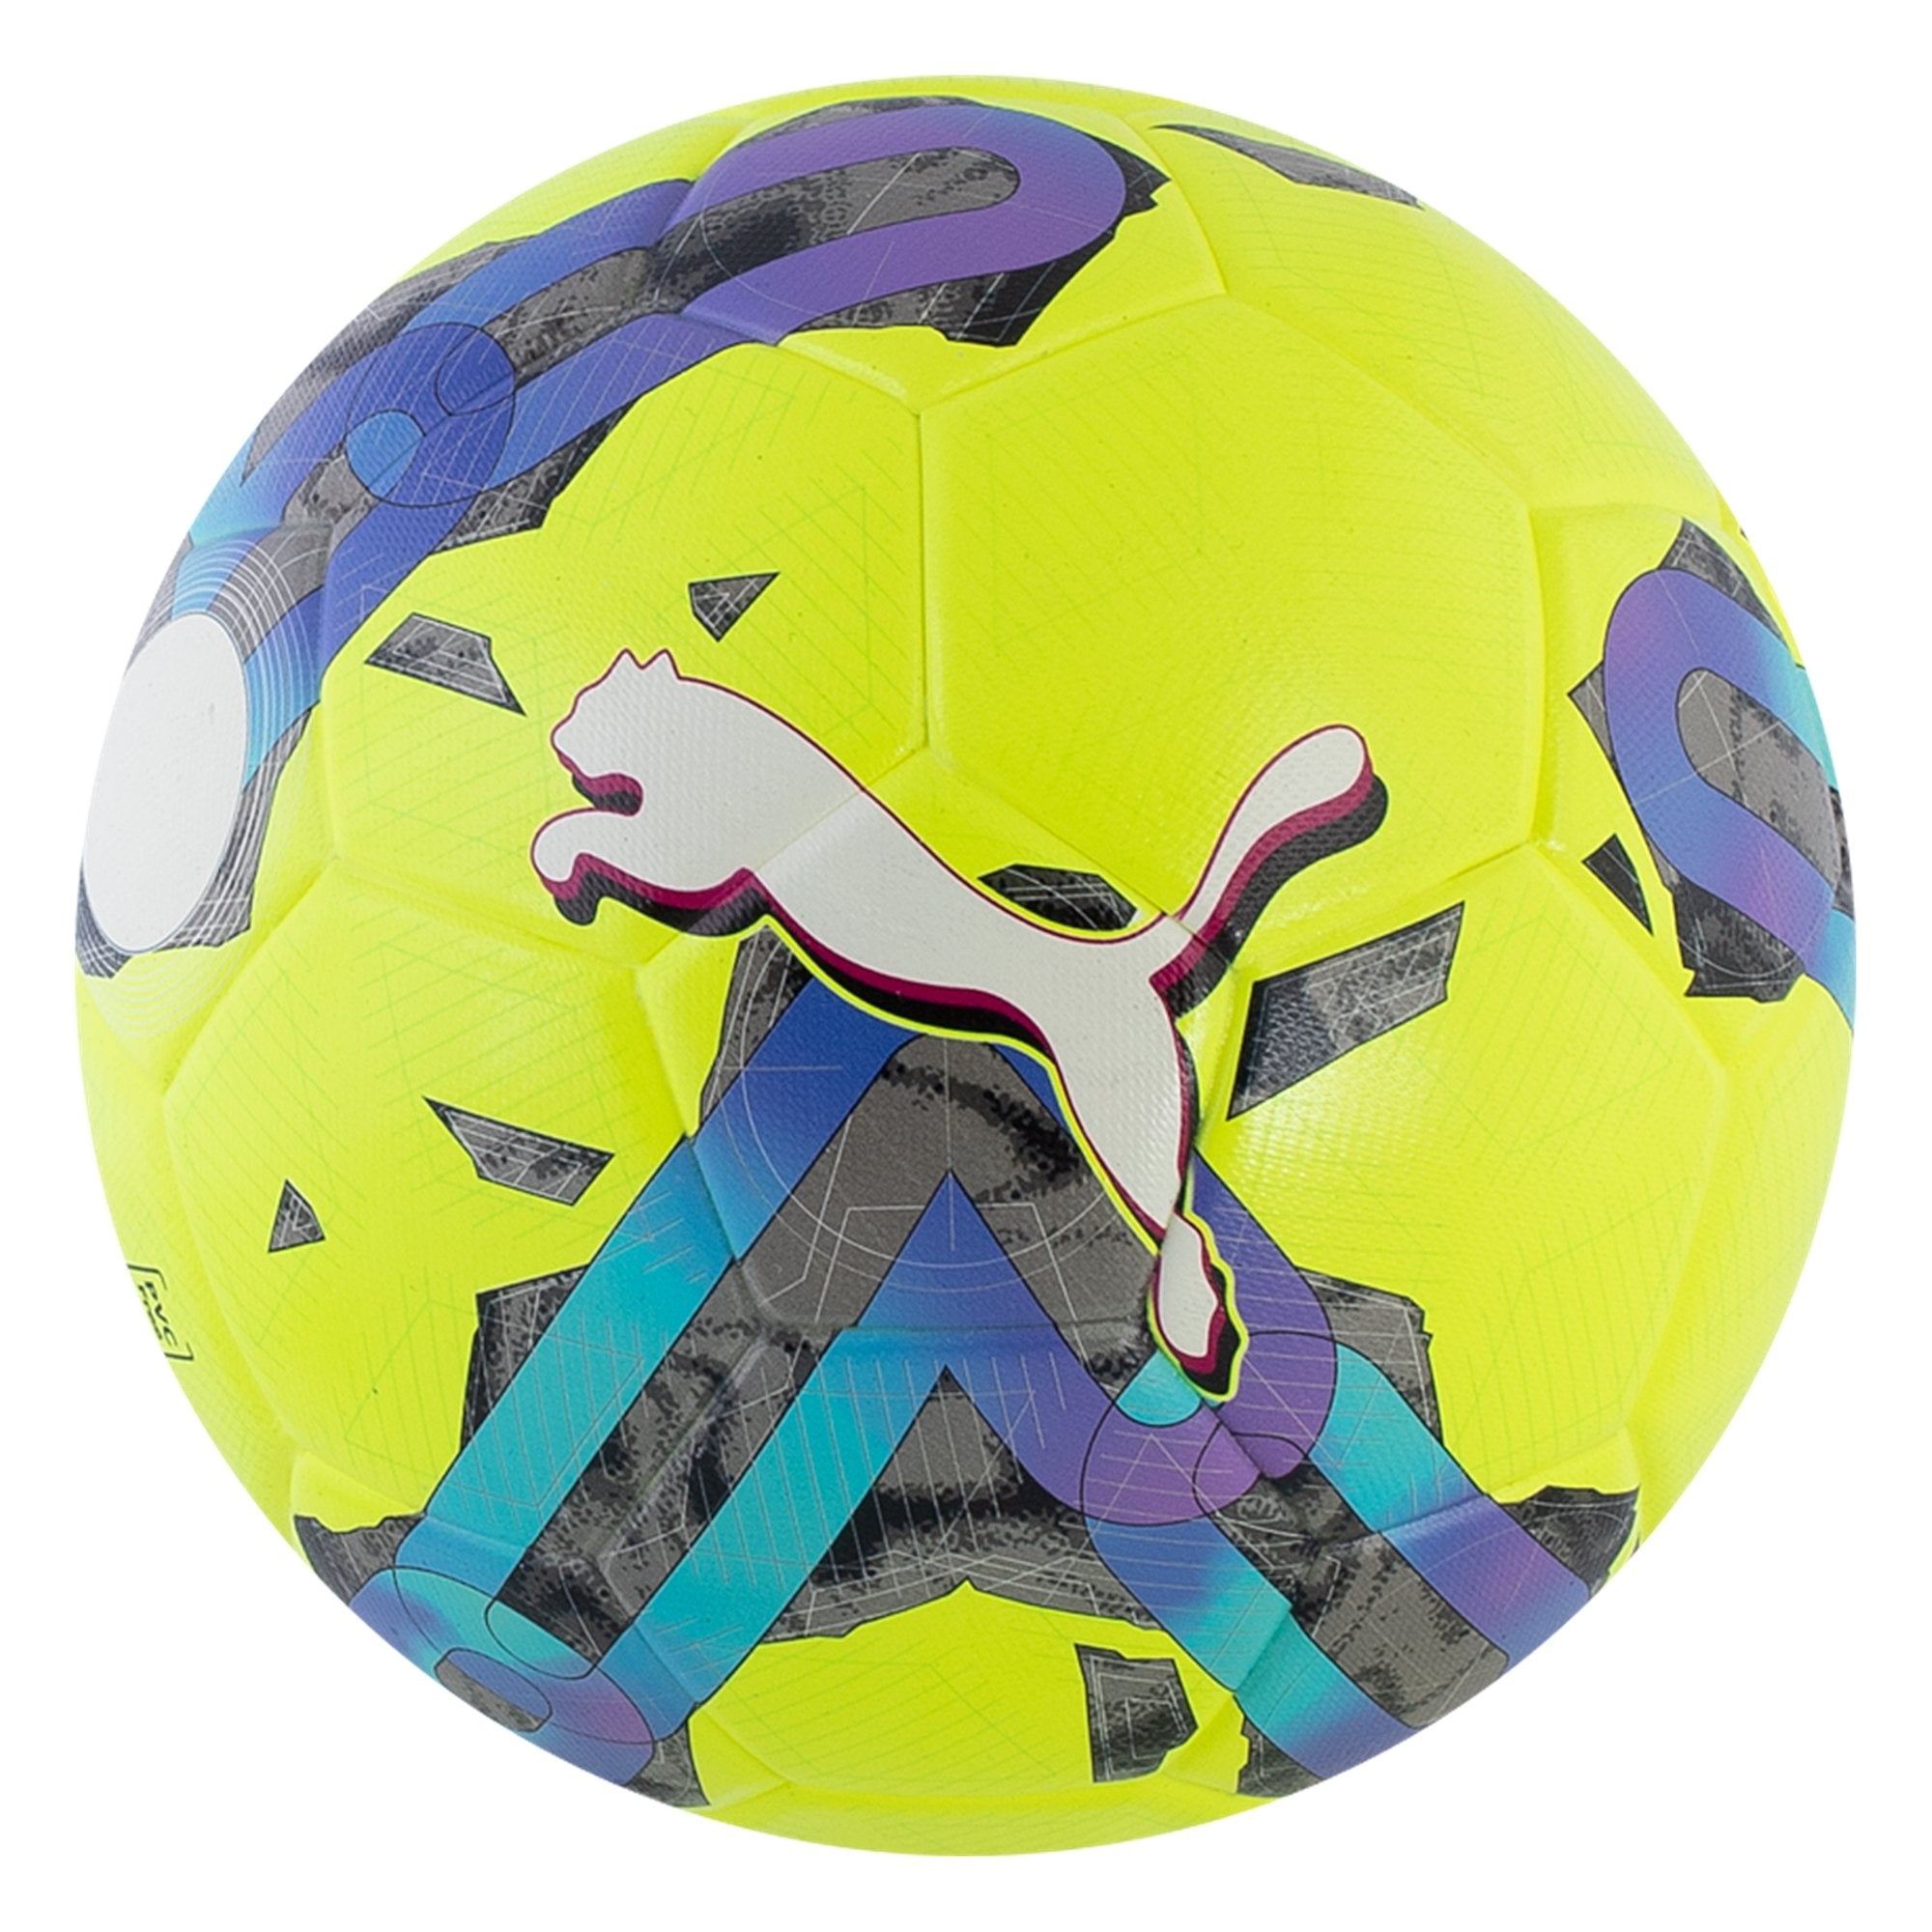 Puma Orbita 3 FIFA Quality NFHS Soccer Ball - Yellow